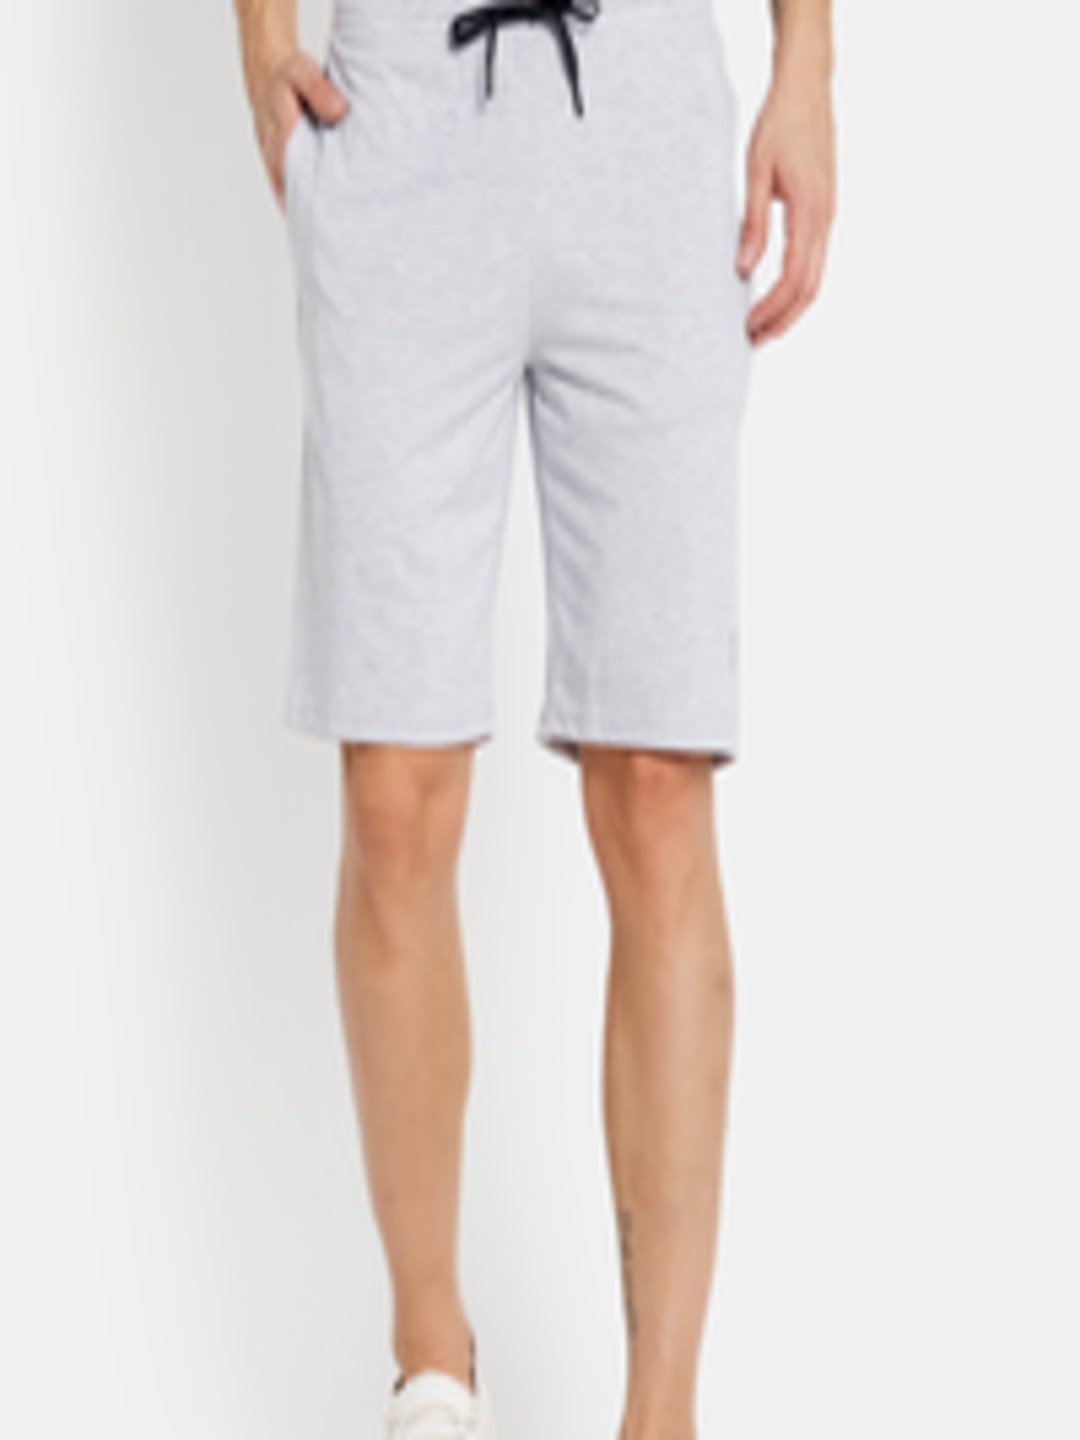 Buy Octave Men Grey Shorts - Shorts for Men 17852552 | Myntra